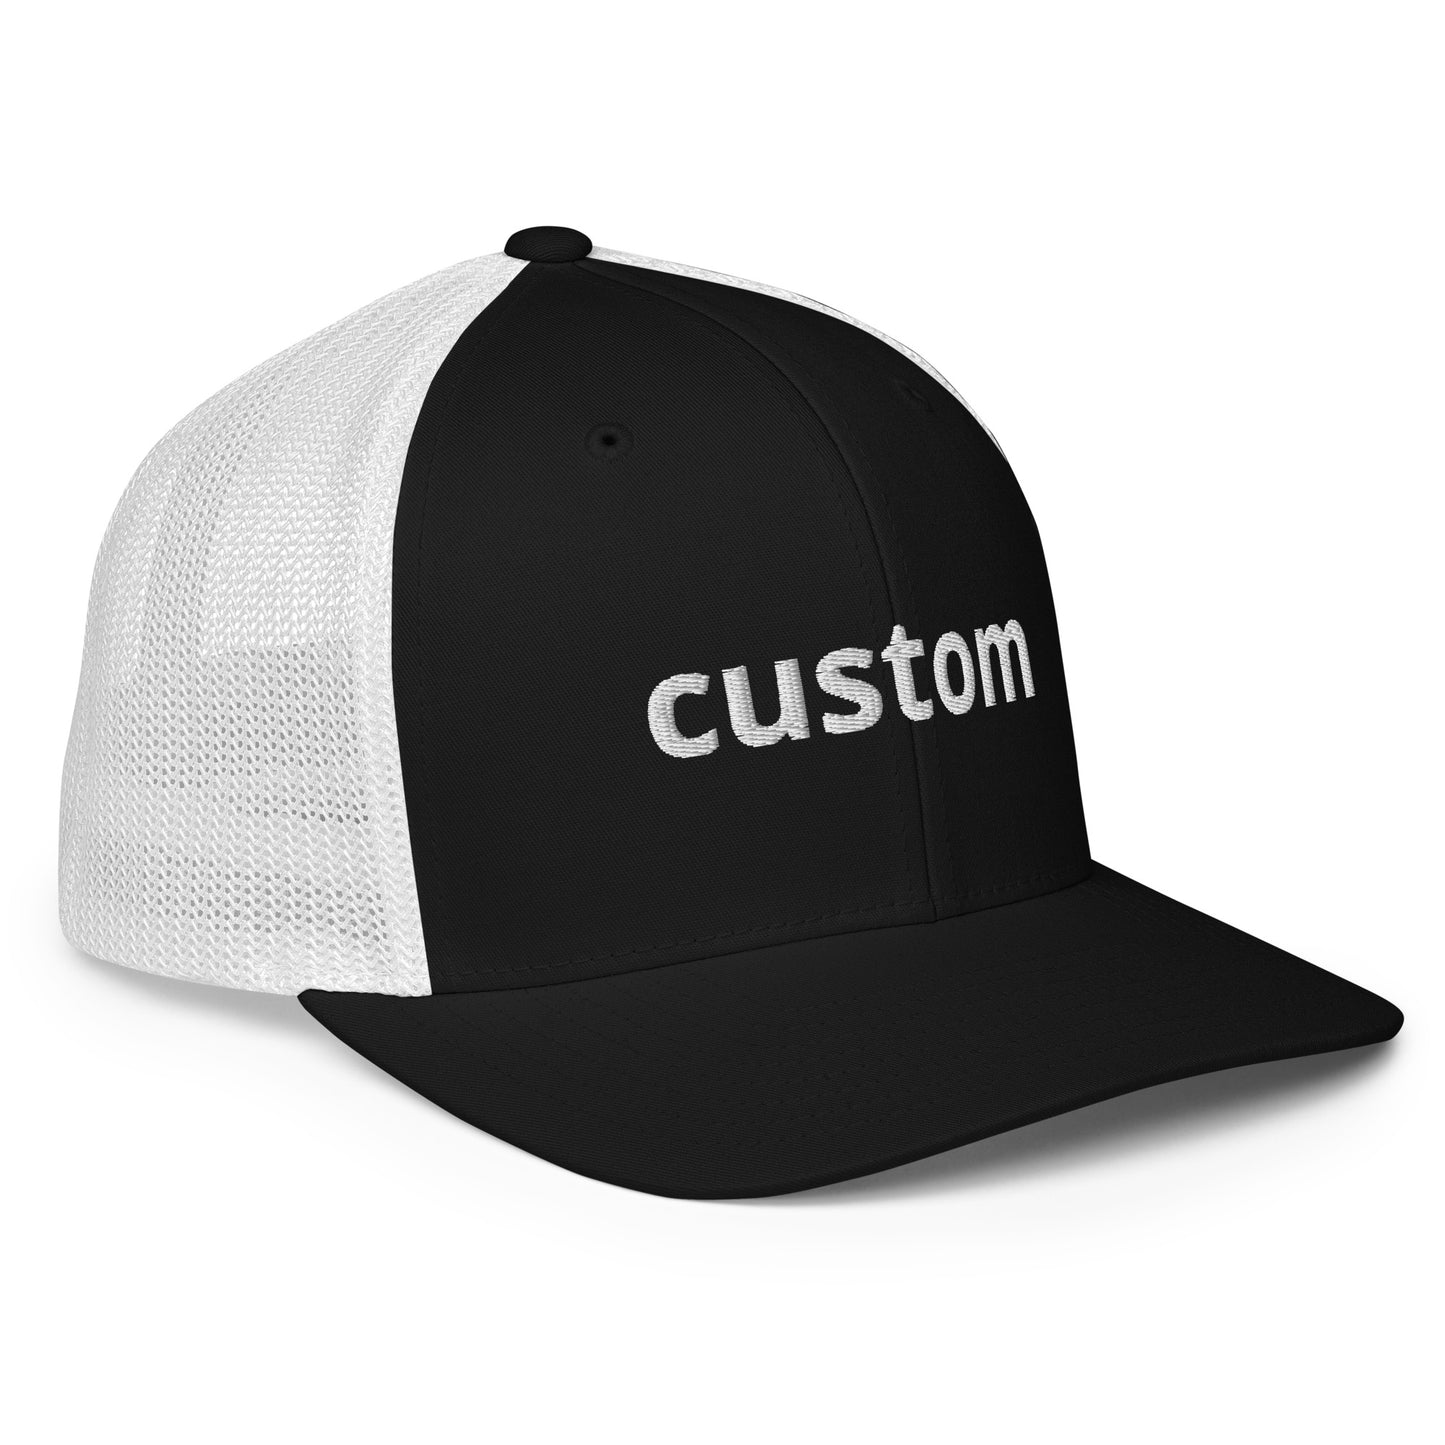 Customize your Trucker Cap